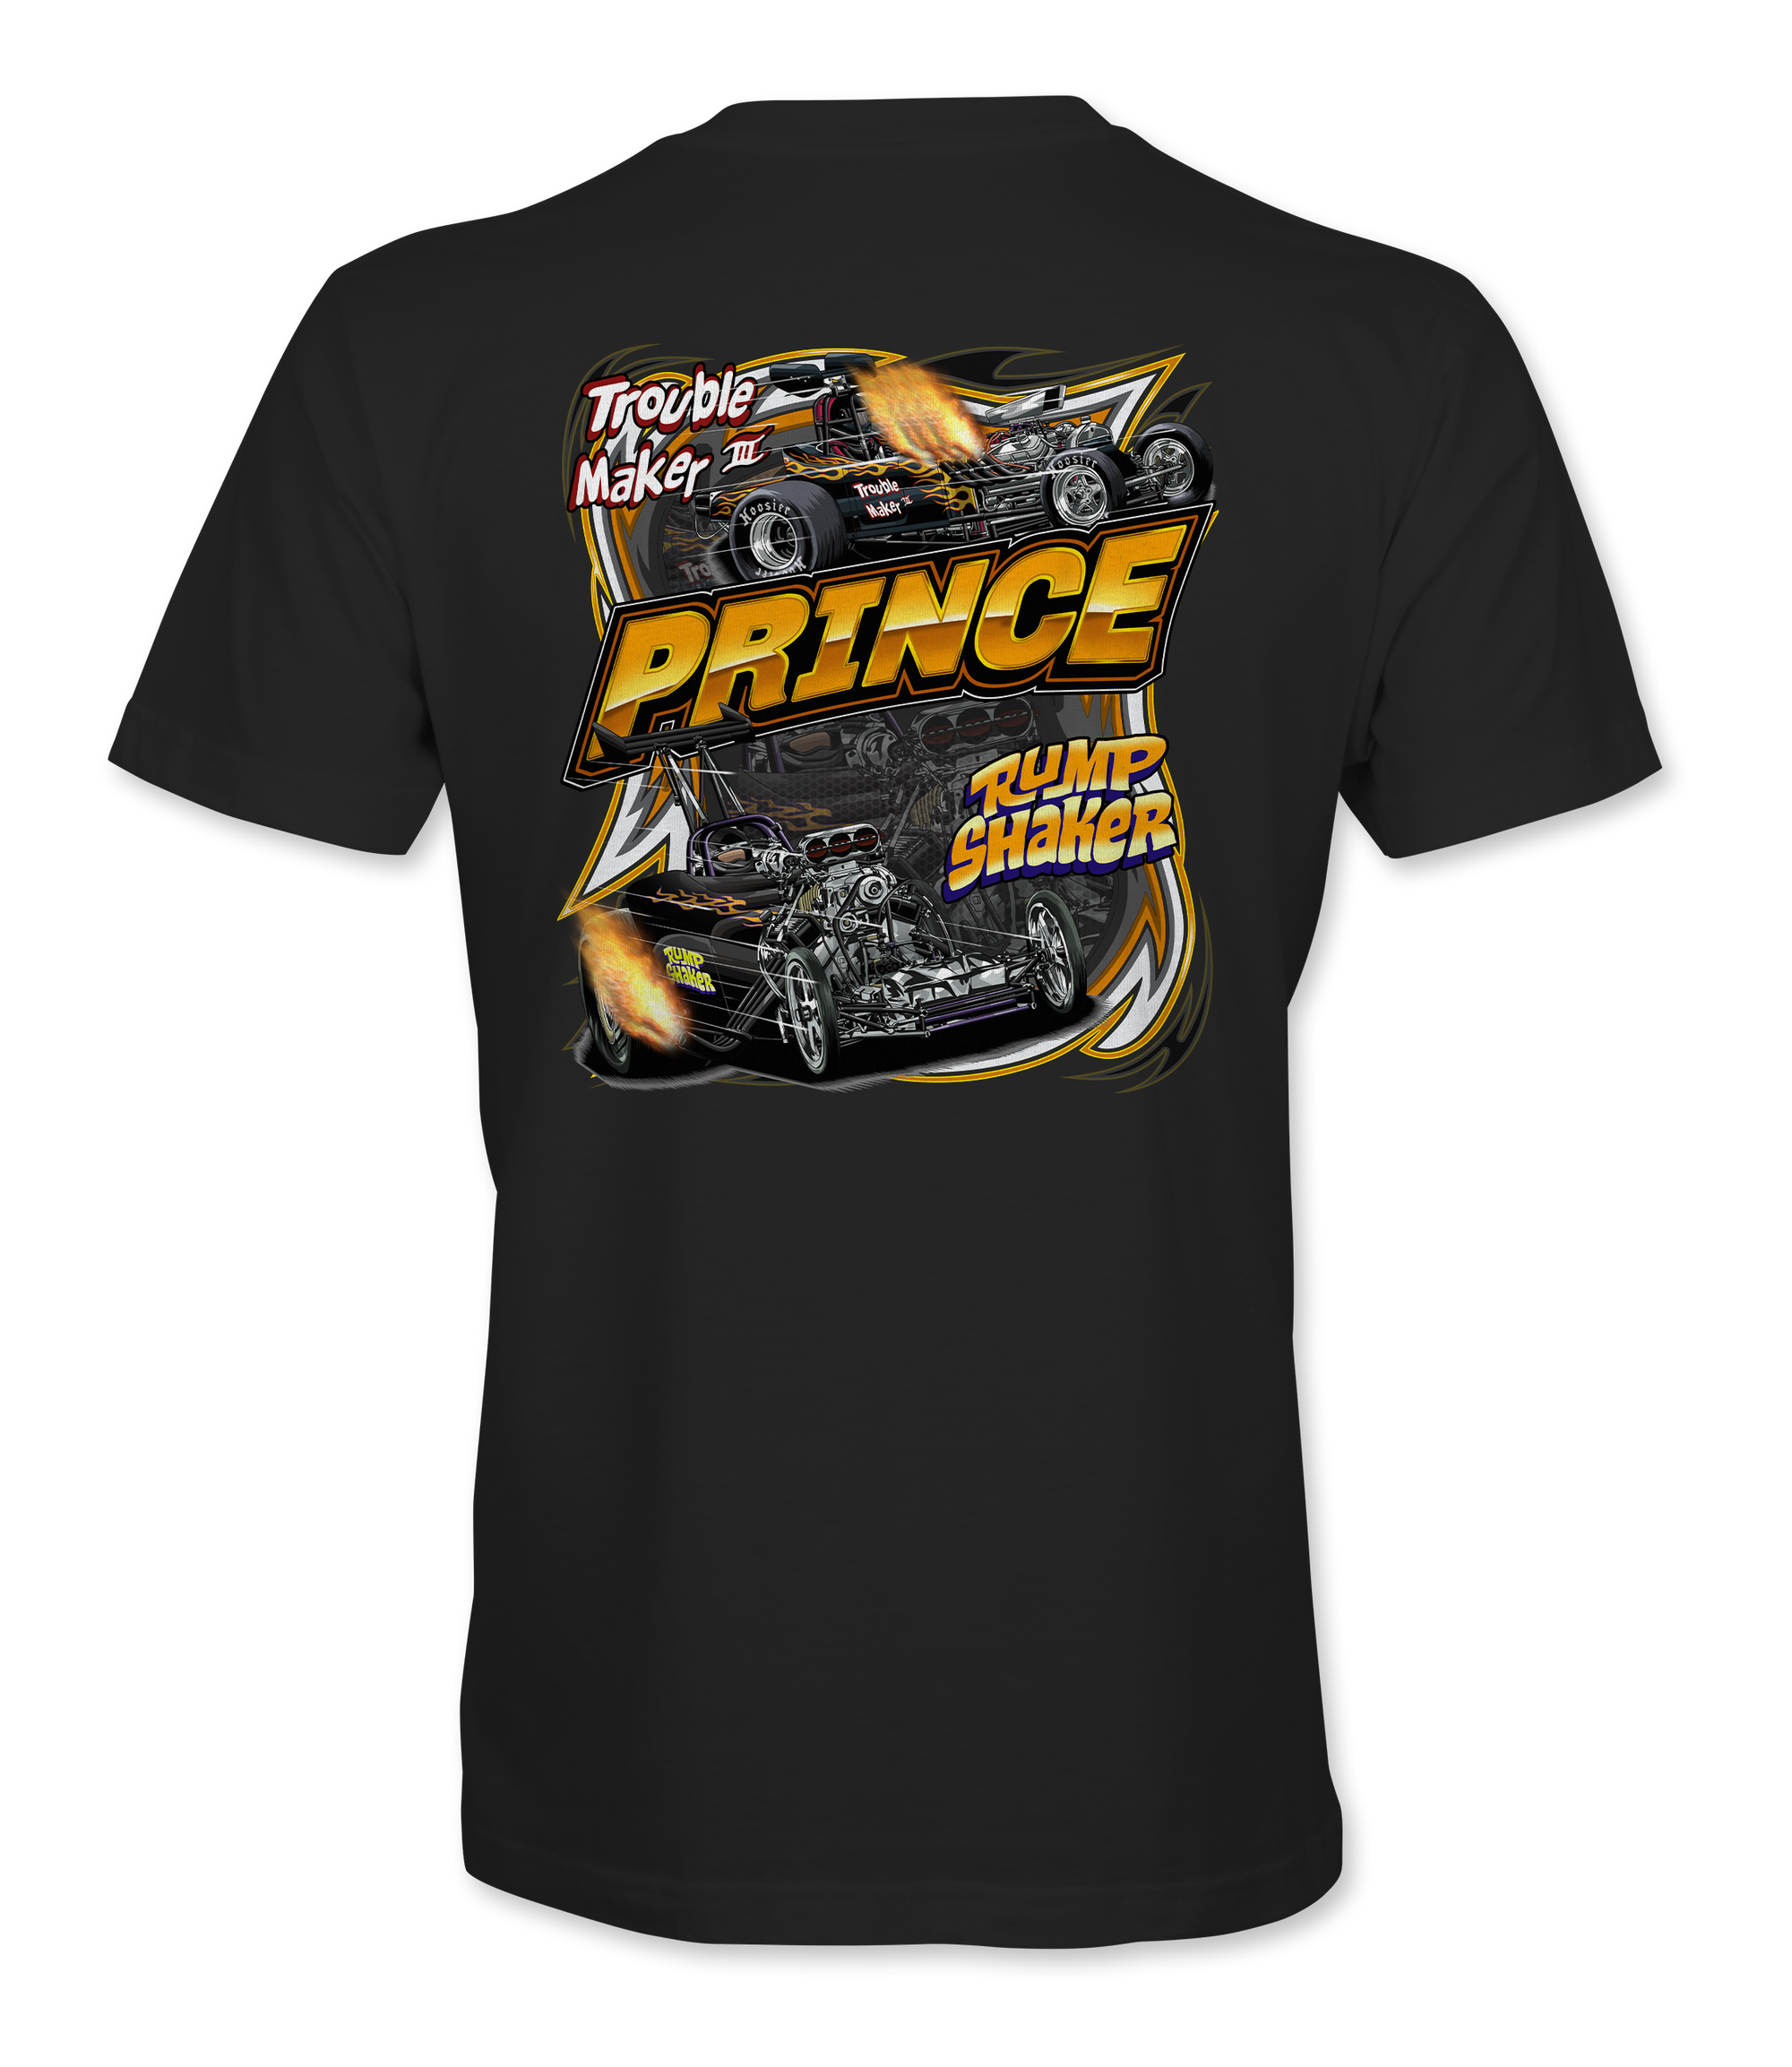 Mark Prince T-Shirts Black Acid Apparel